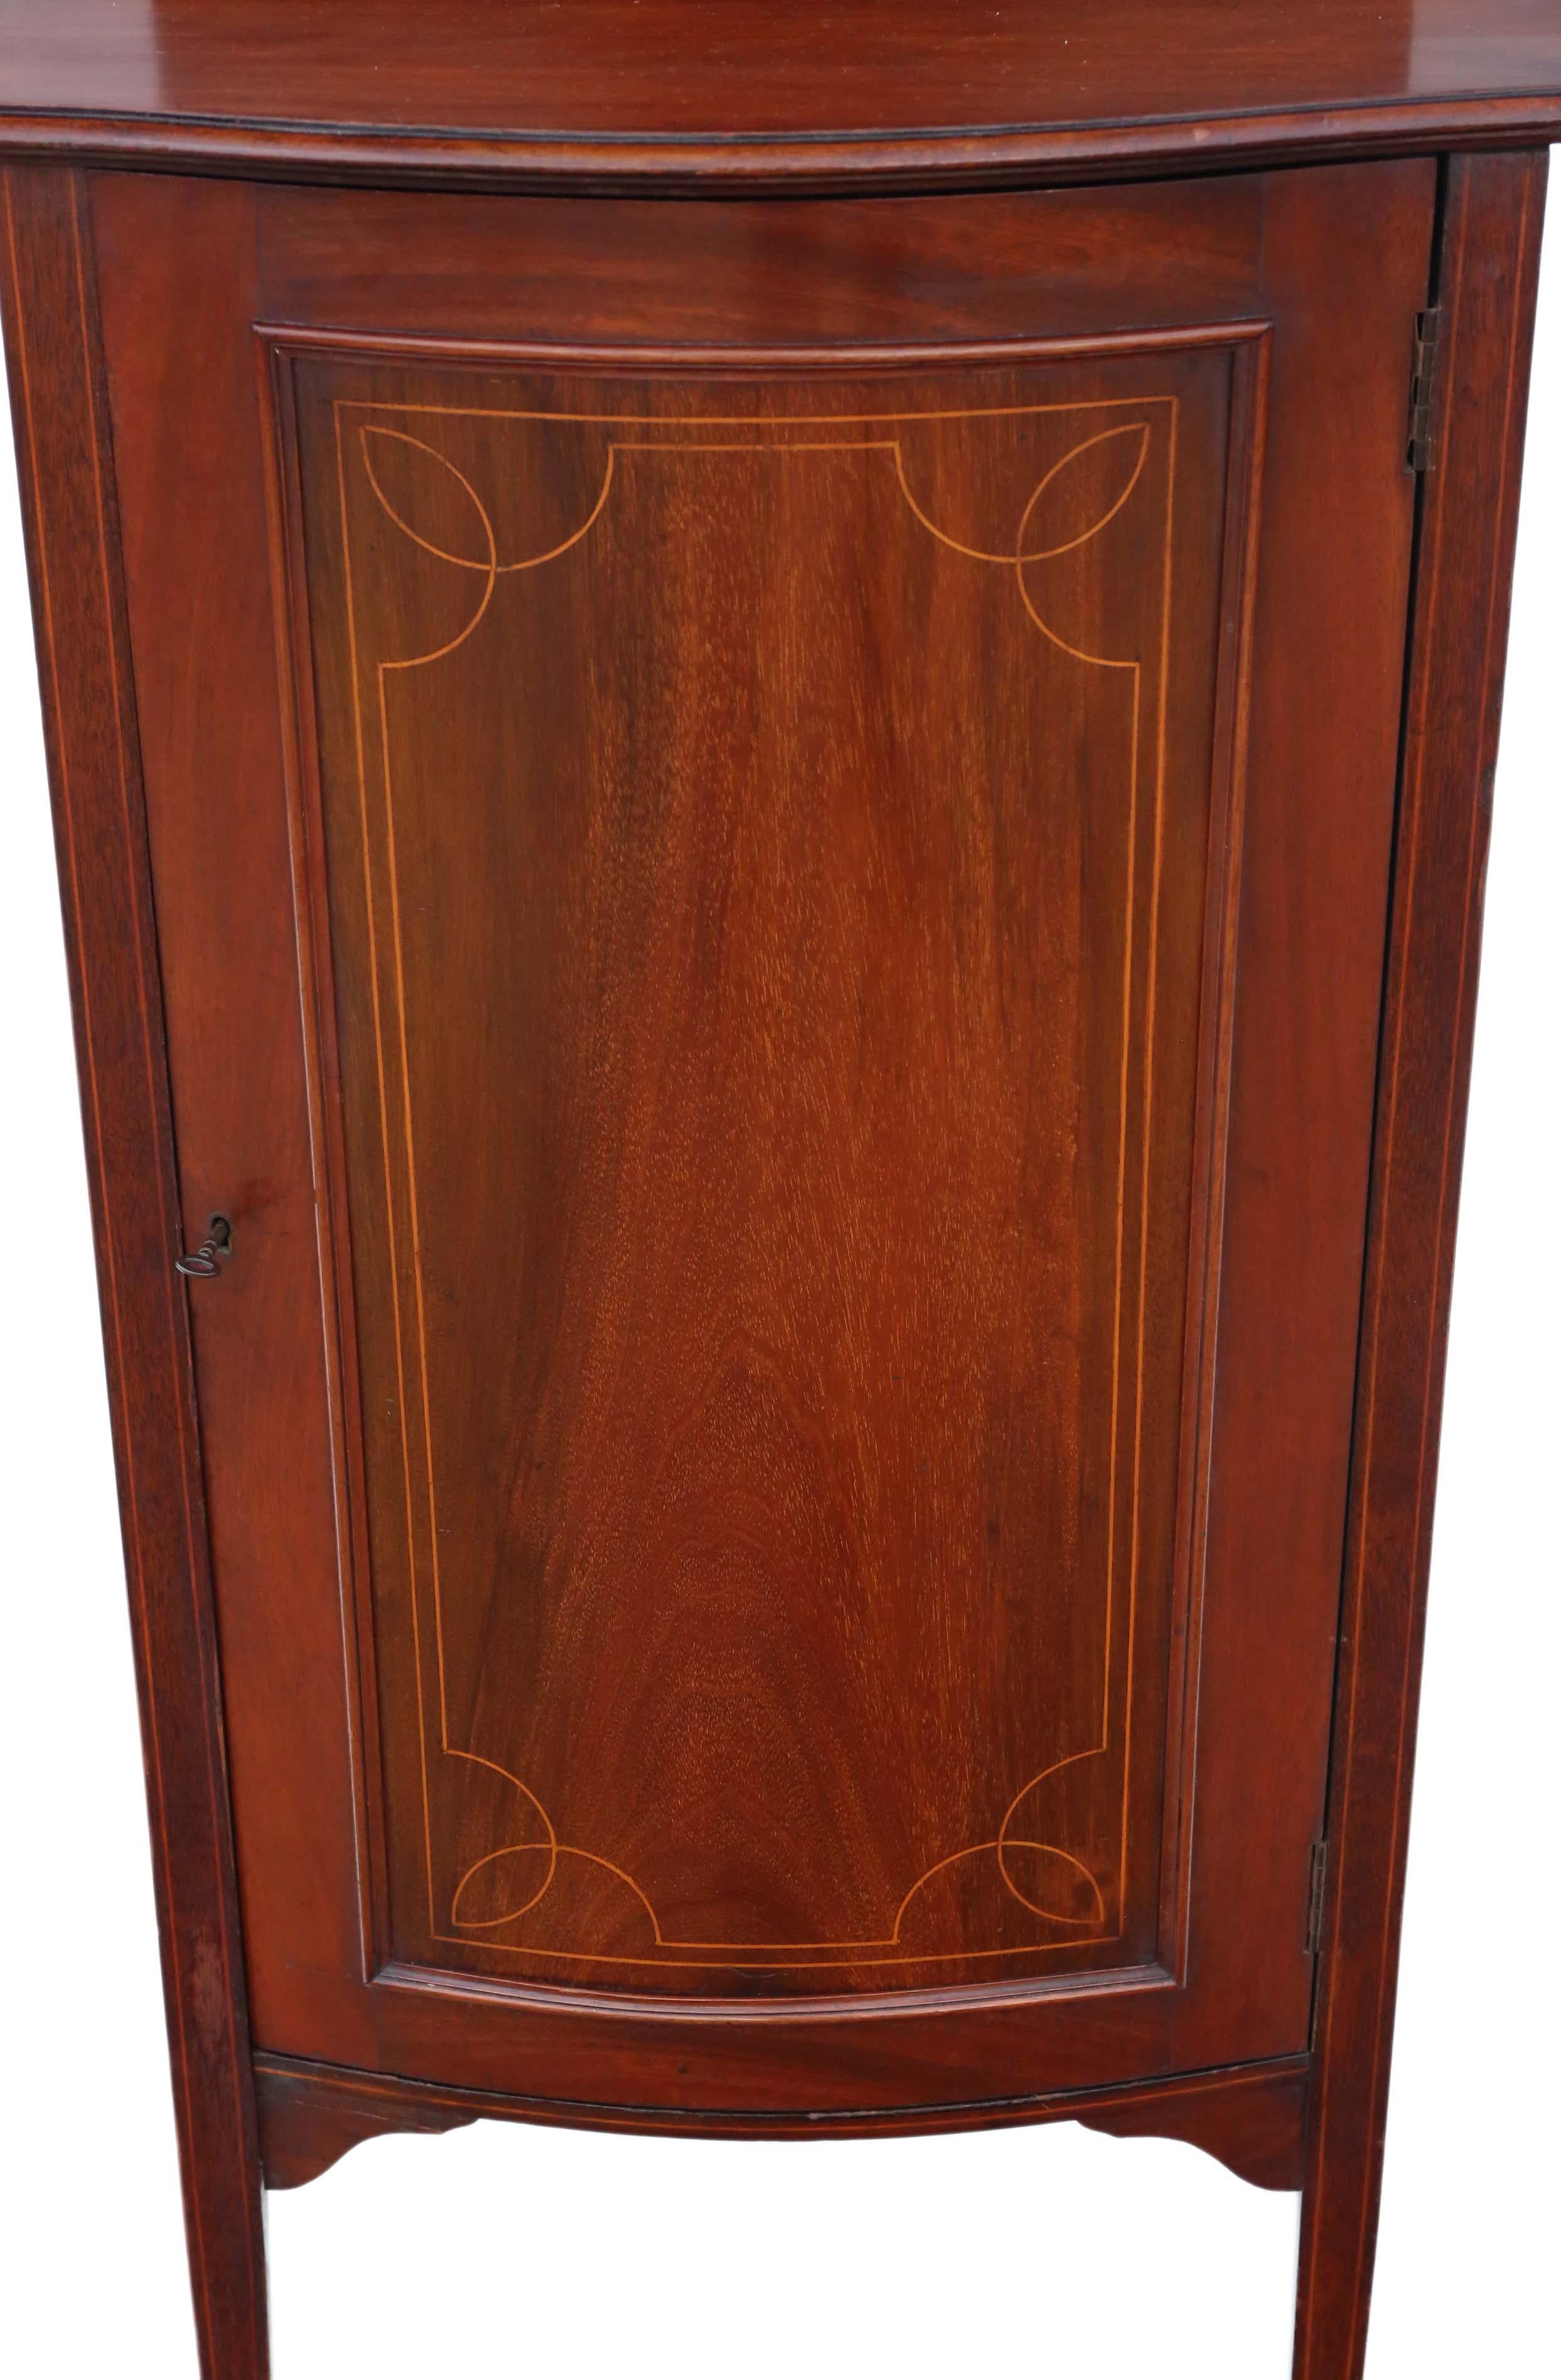 Early 20th Century Edwardian Inlaid Mahogany Music Cabinet Cupboard, circa 1910